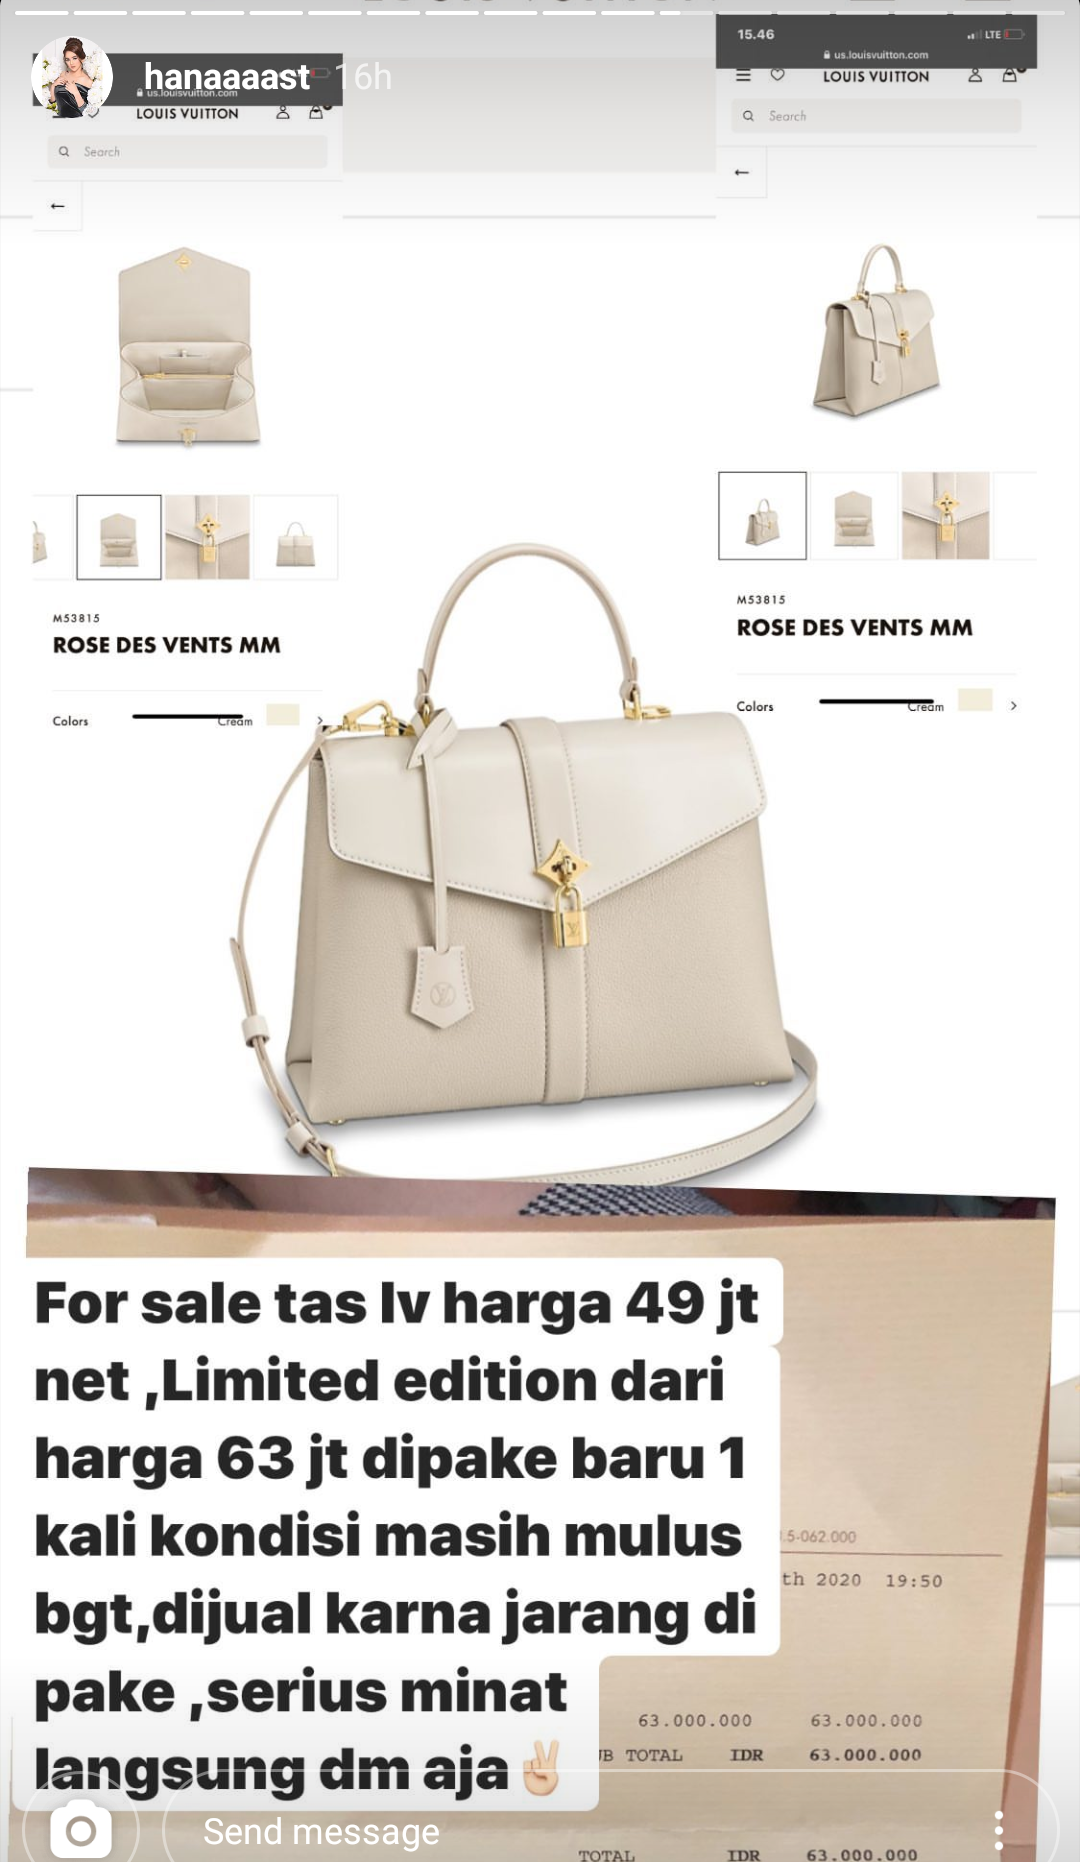 Instagram story Hana Hanifah menjual tas Louis Vuitton.